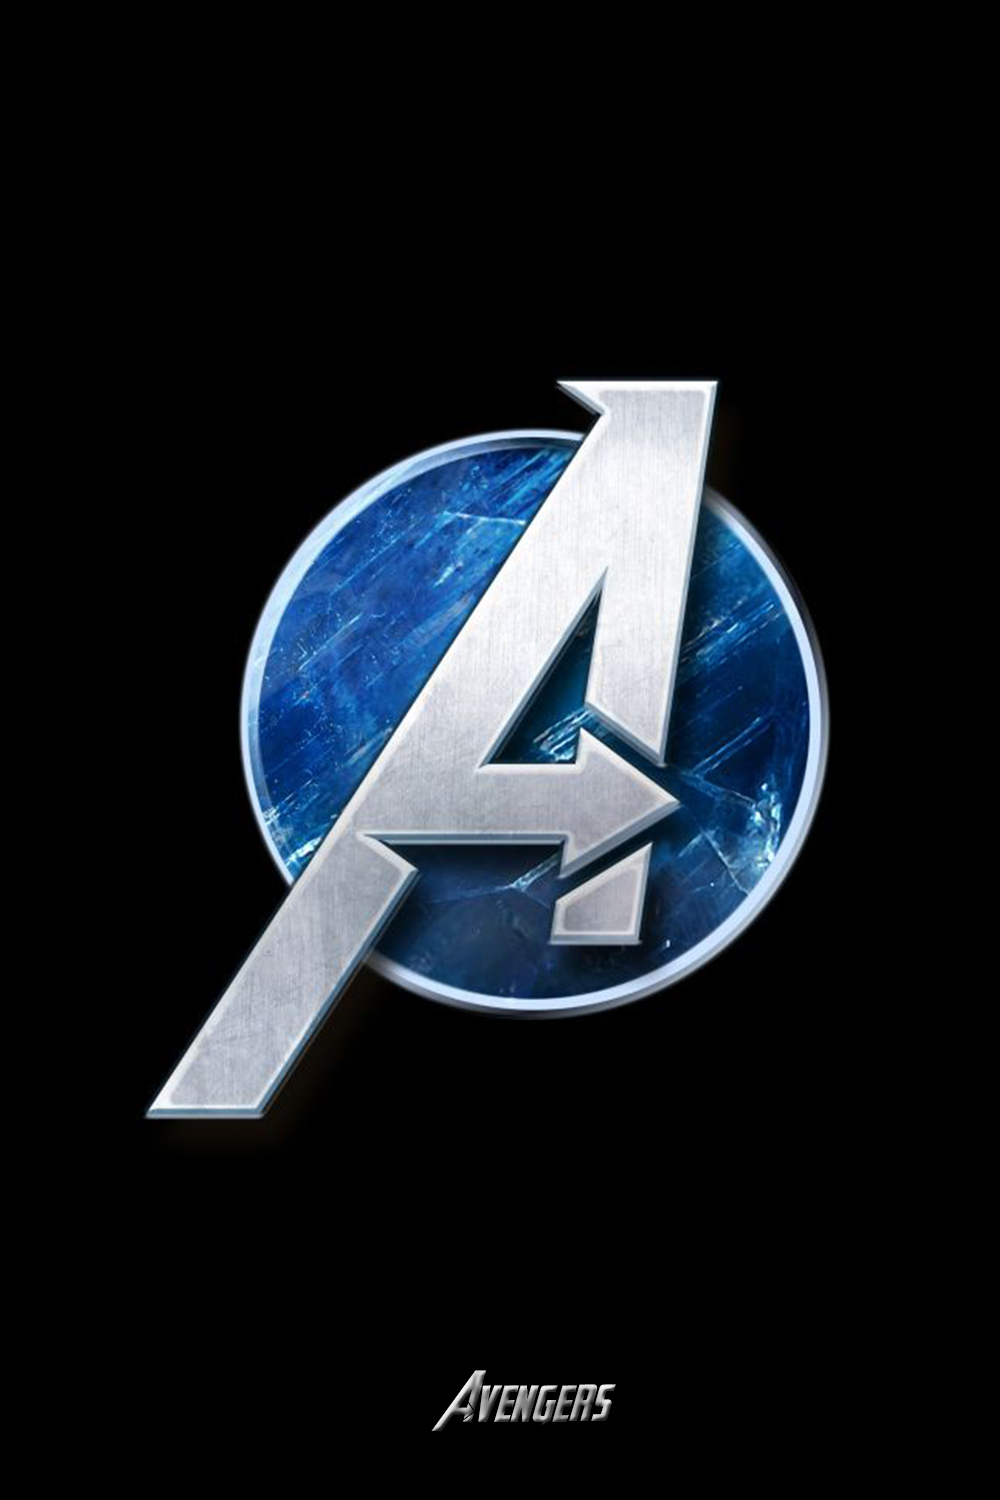 Best Marvel HD Wallpaper Free Download. Avengers